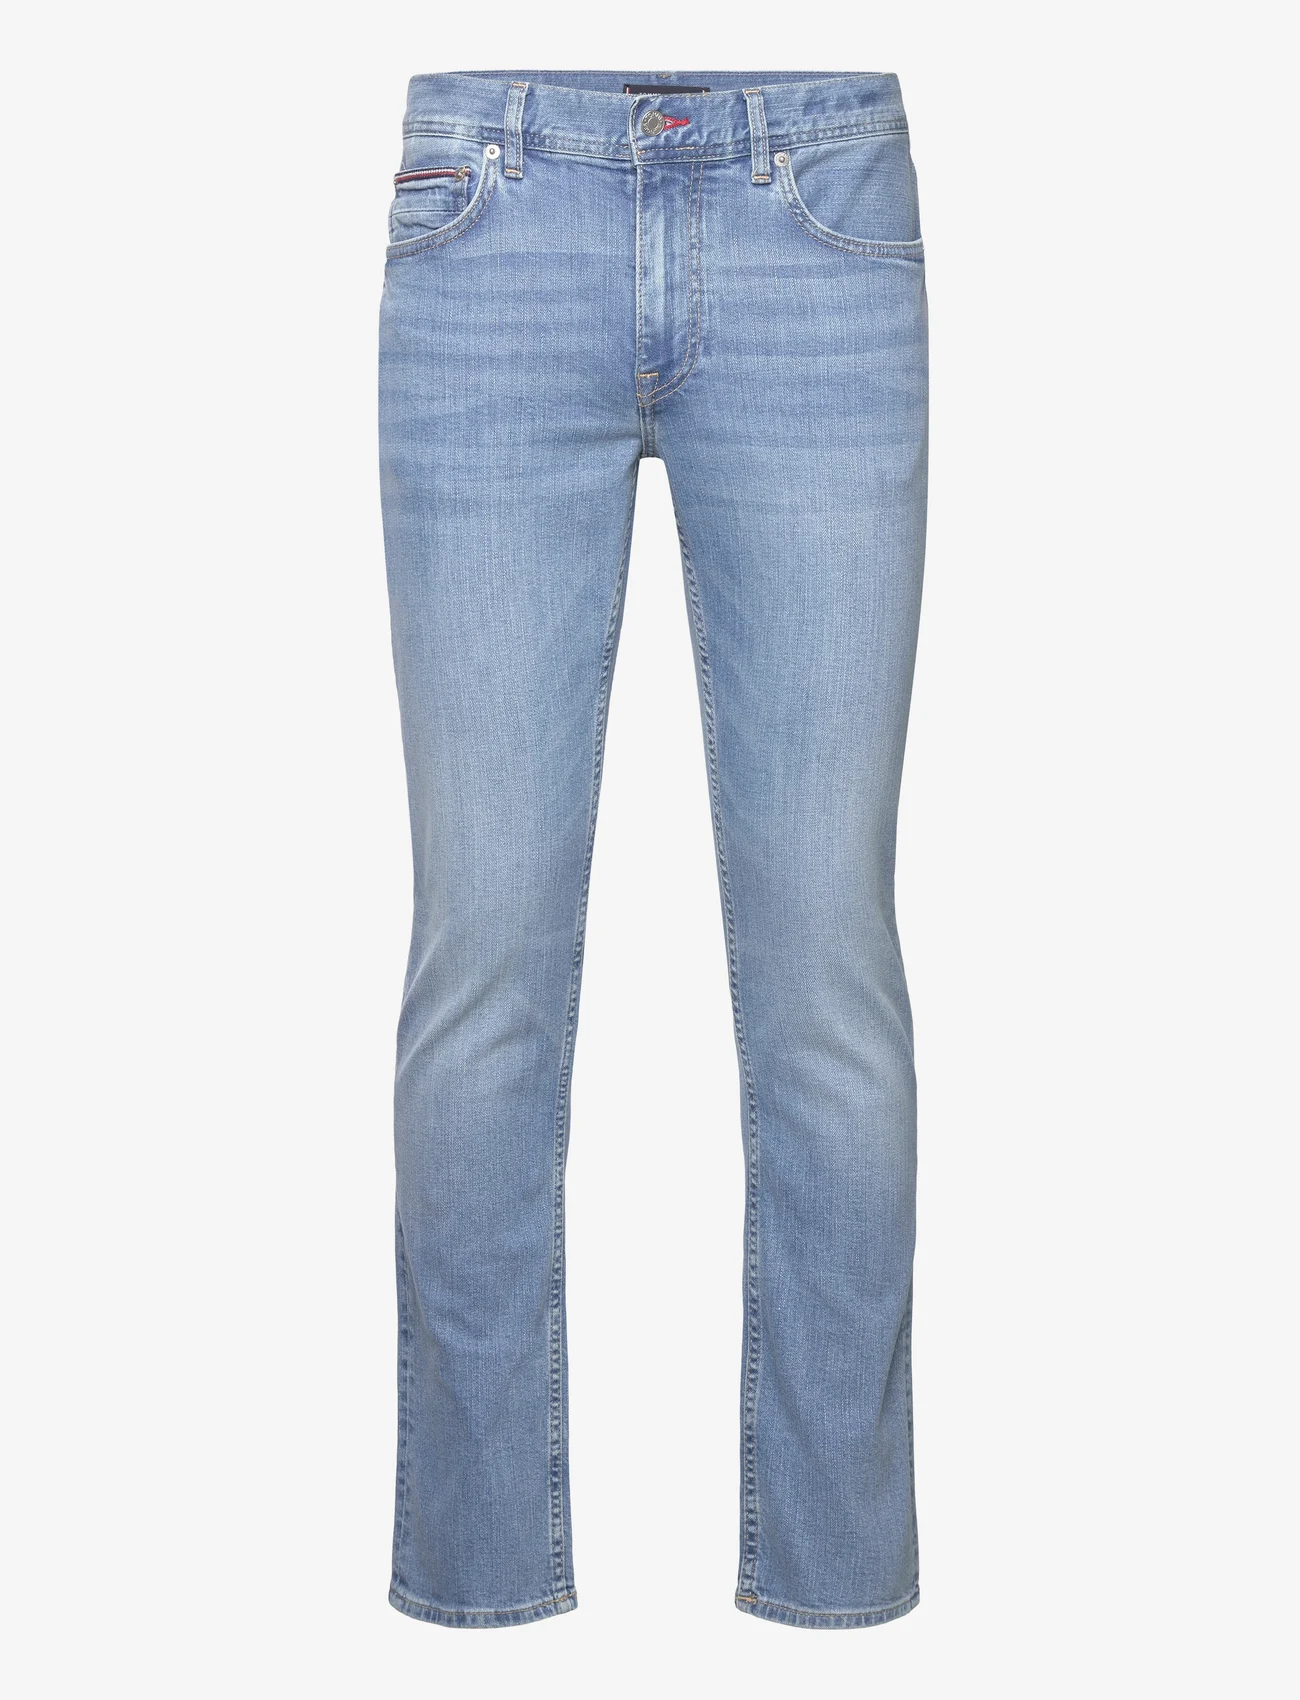 Tommy Hilfiger - STRAIGHT DENTON STR AMSTON BLUE - regular jeans - amston blue - 0